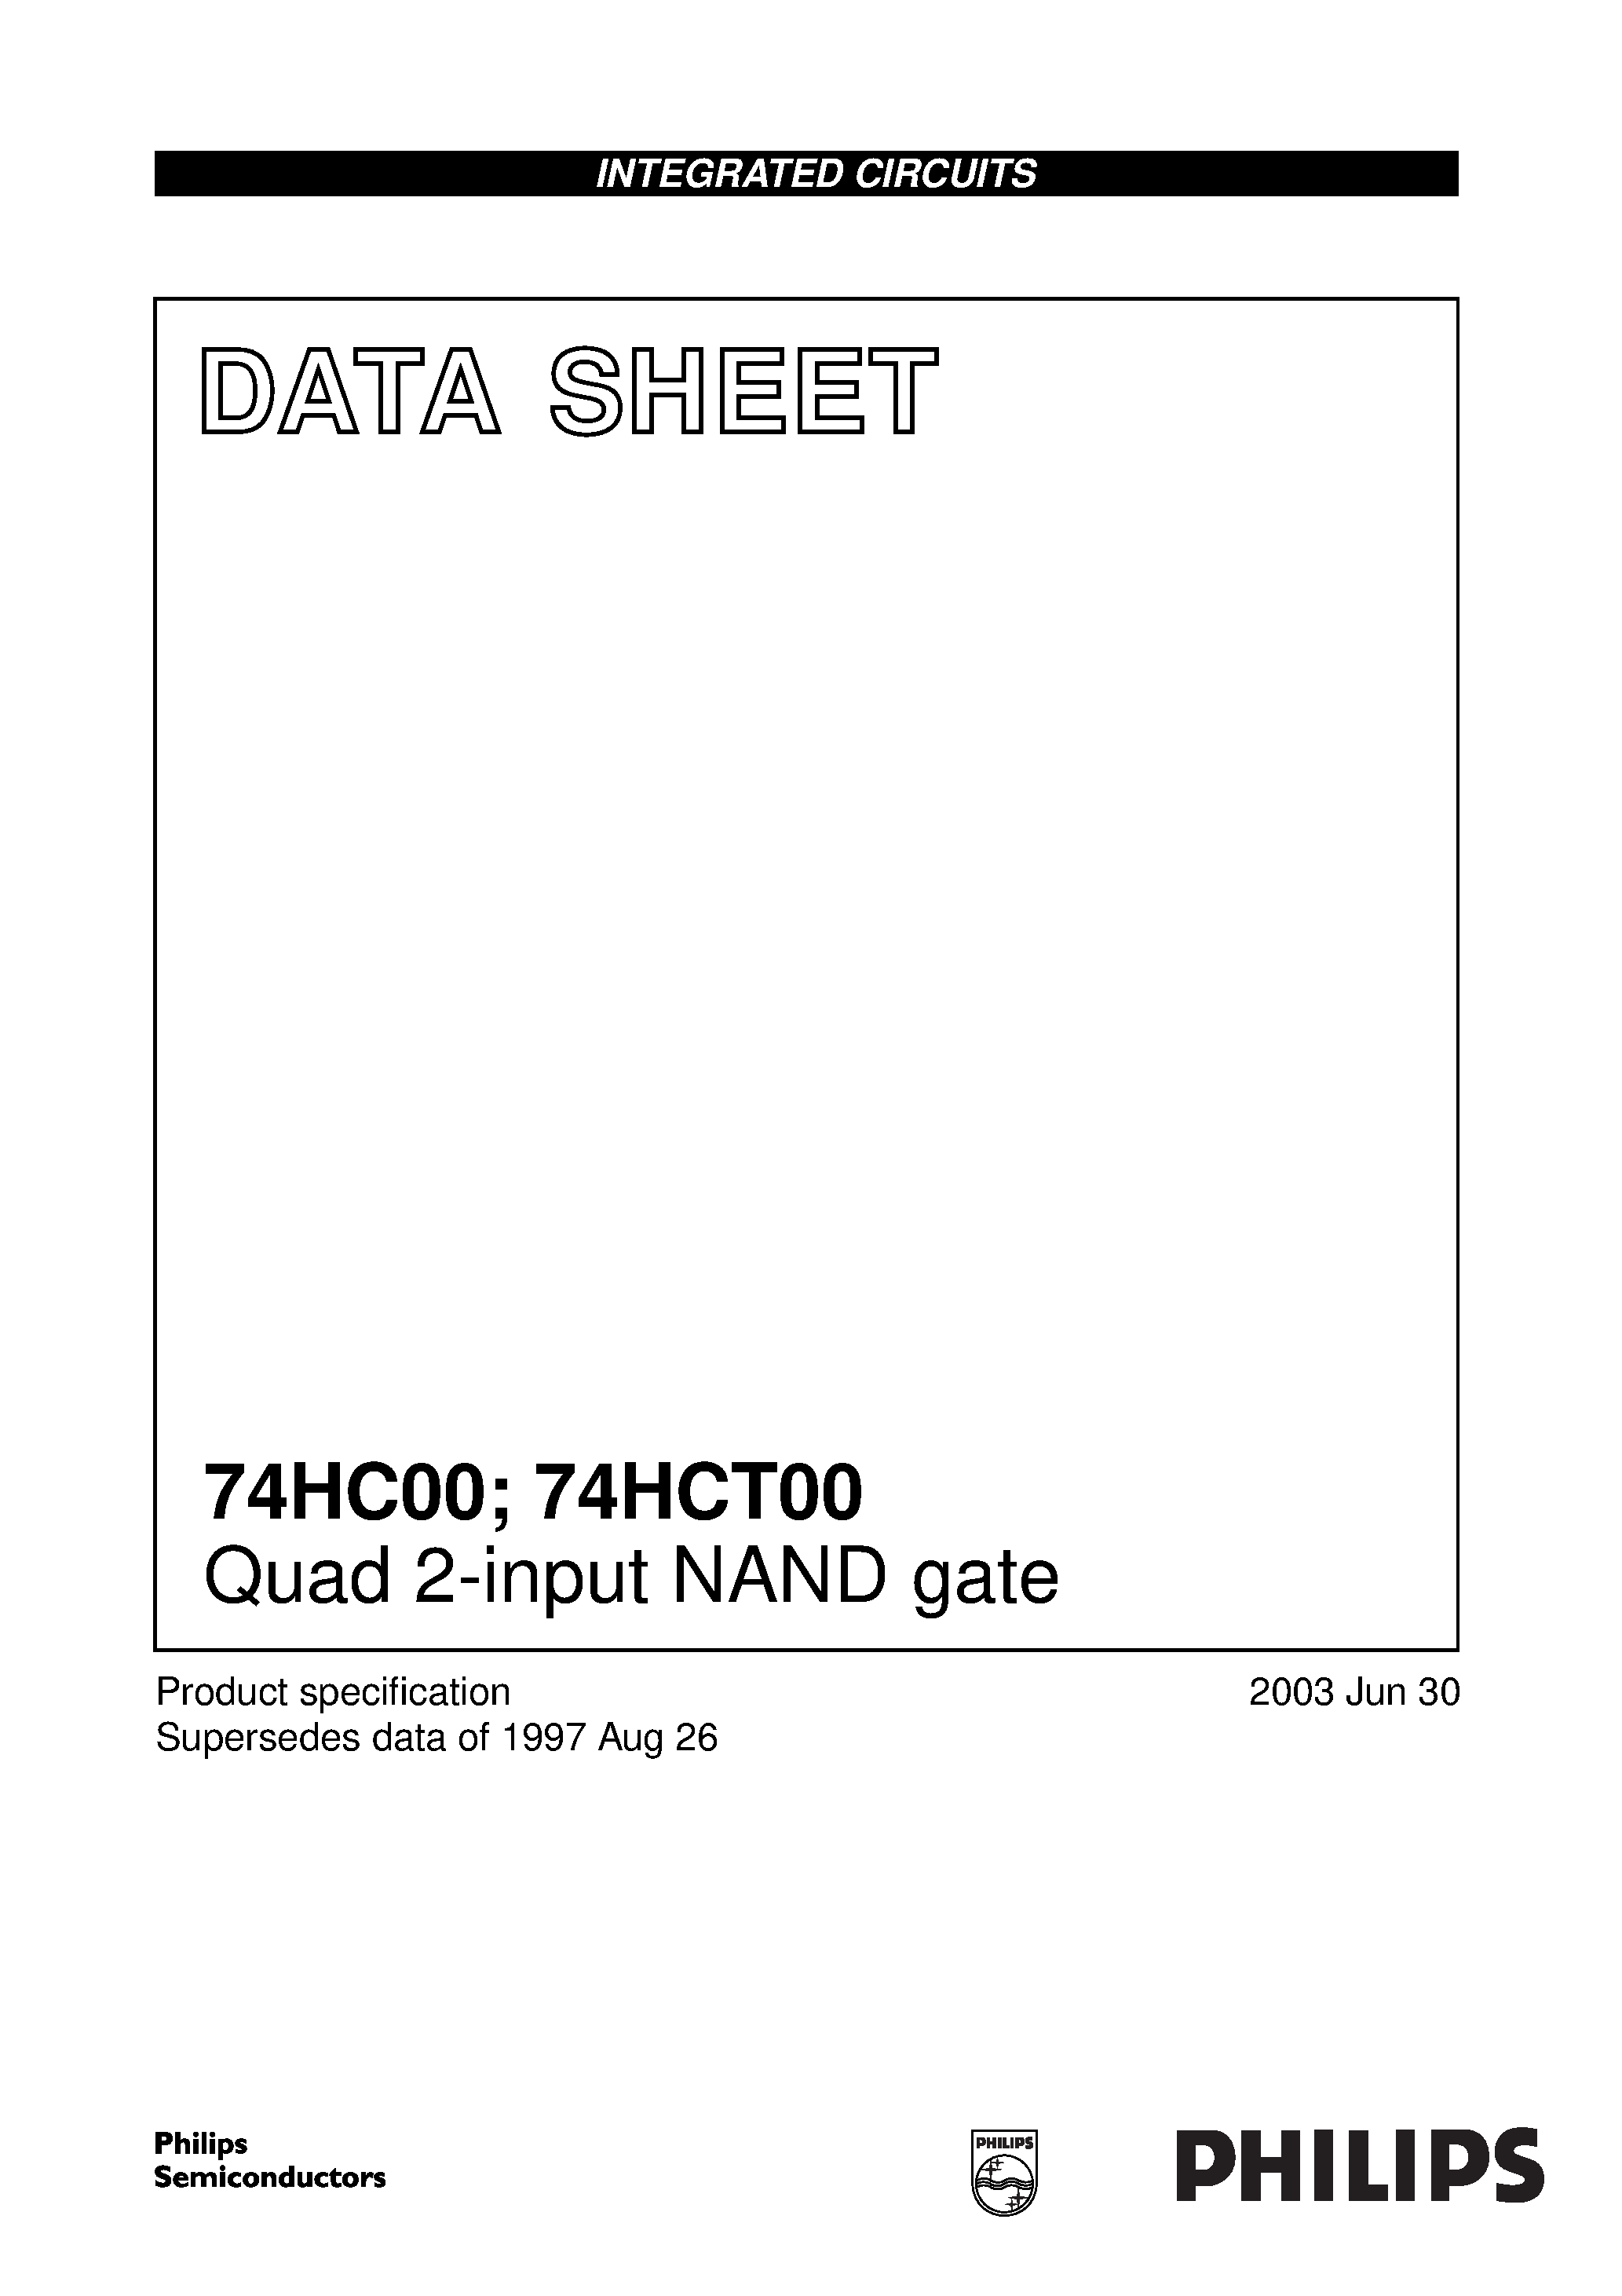 Datasheet 74HCT00PW - Quad 2-input NAND gate page 1